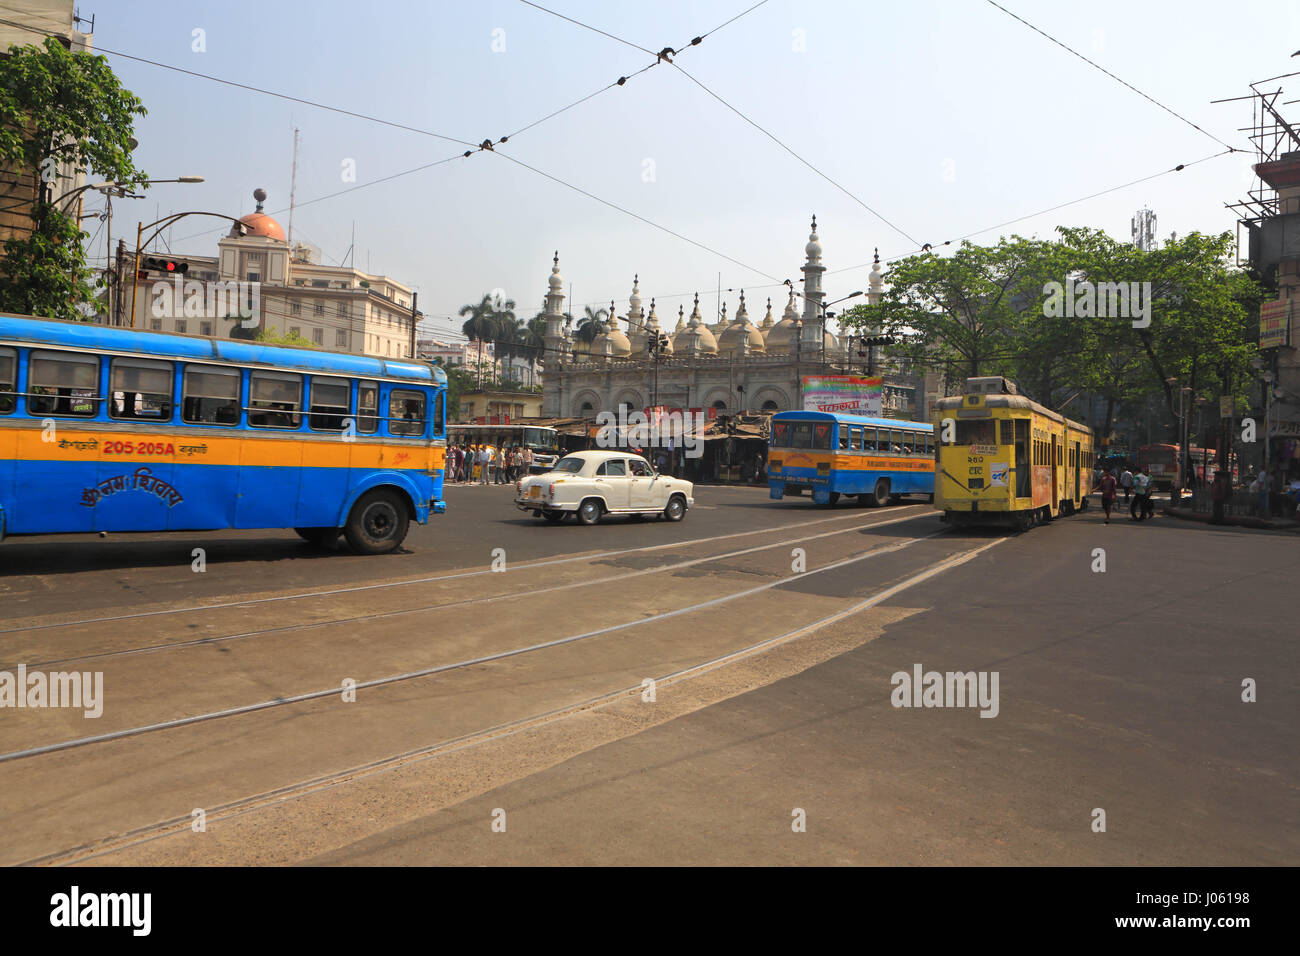 Les Trams, Kolkata, Bengale occidental, Inde, Asie Banque D'Images